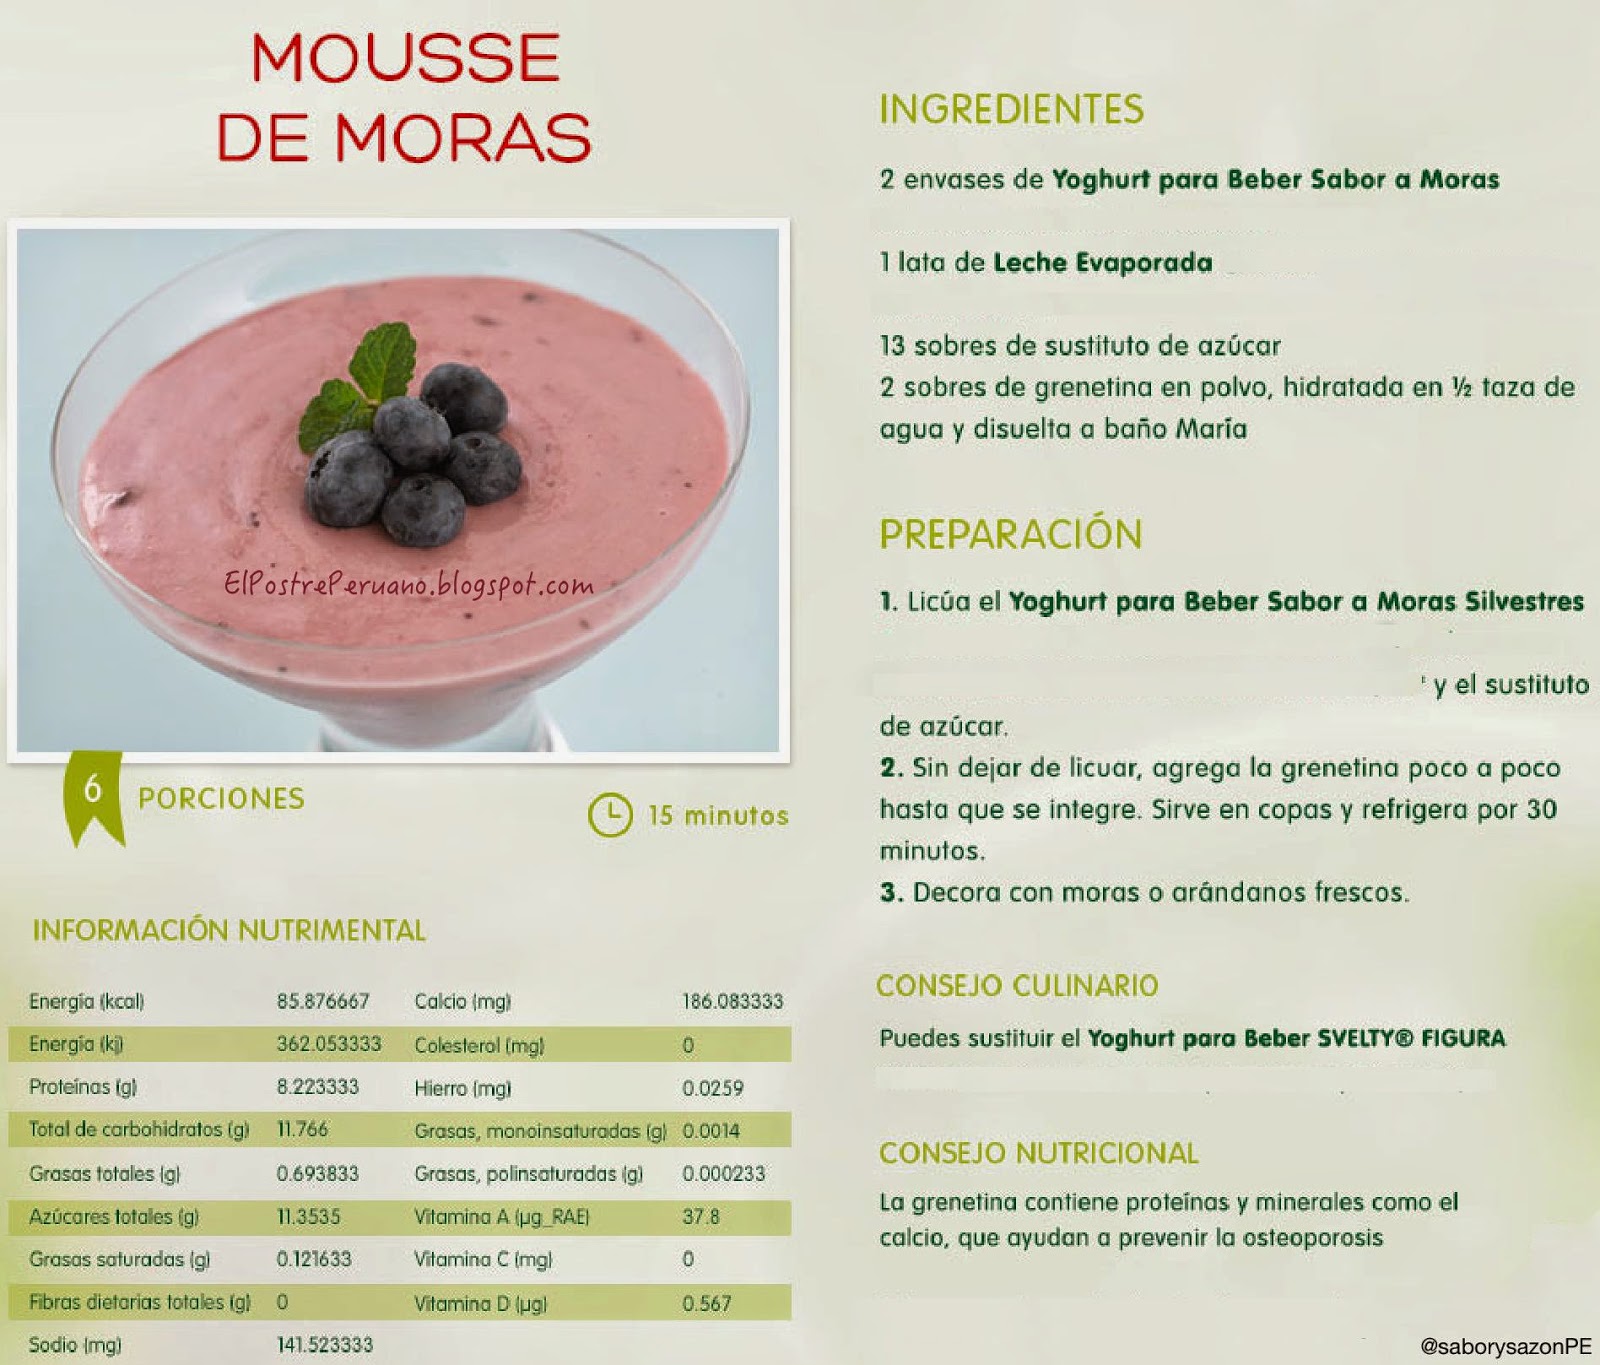 MOUSSE DE MORAS - RECETAS BAJAS EN CALORIAS - POSTRES LIGHT recipes